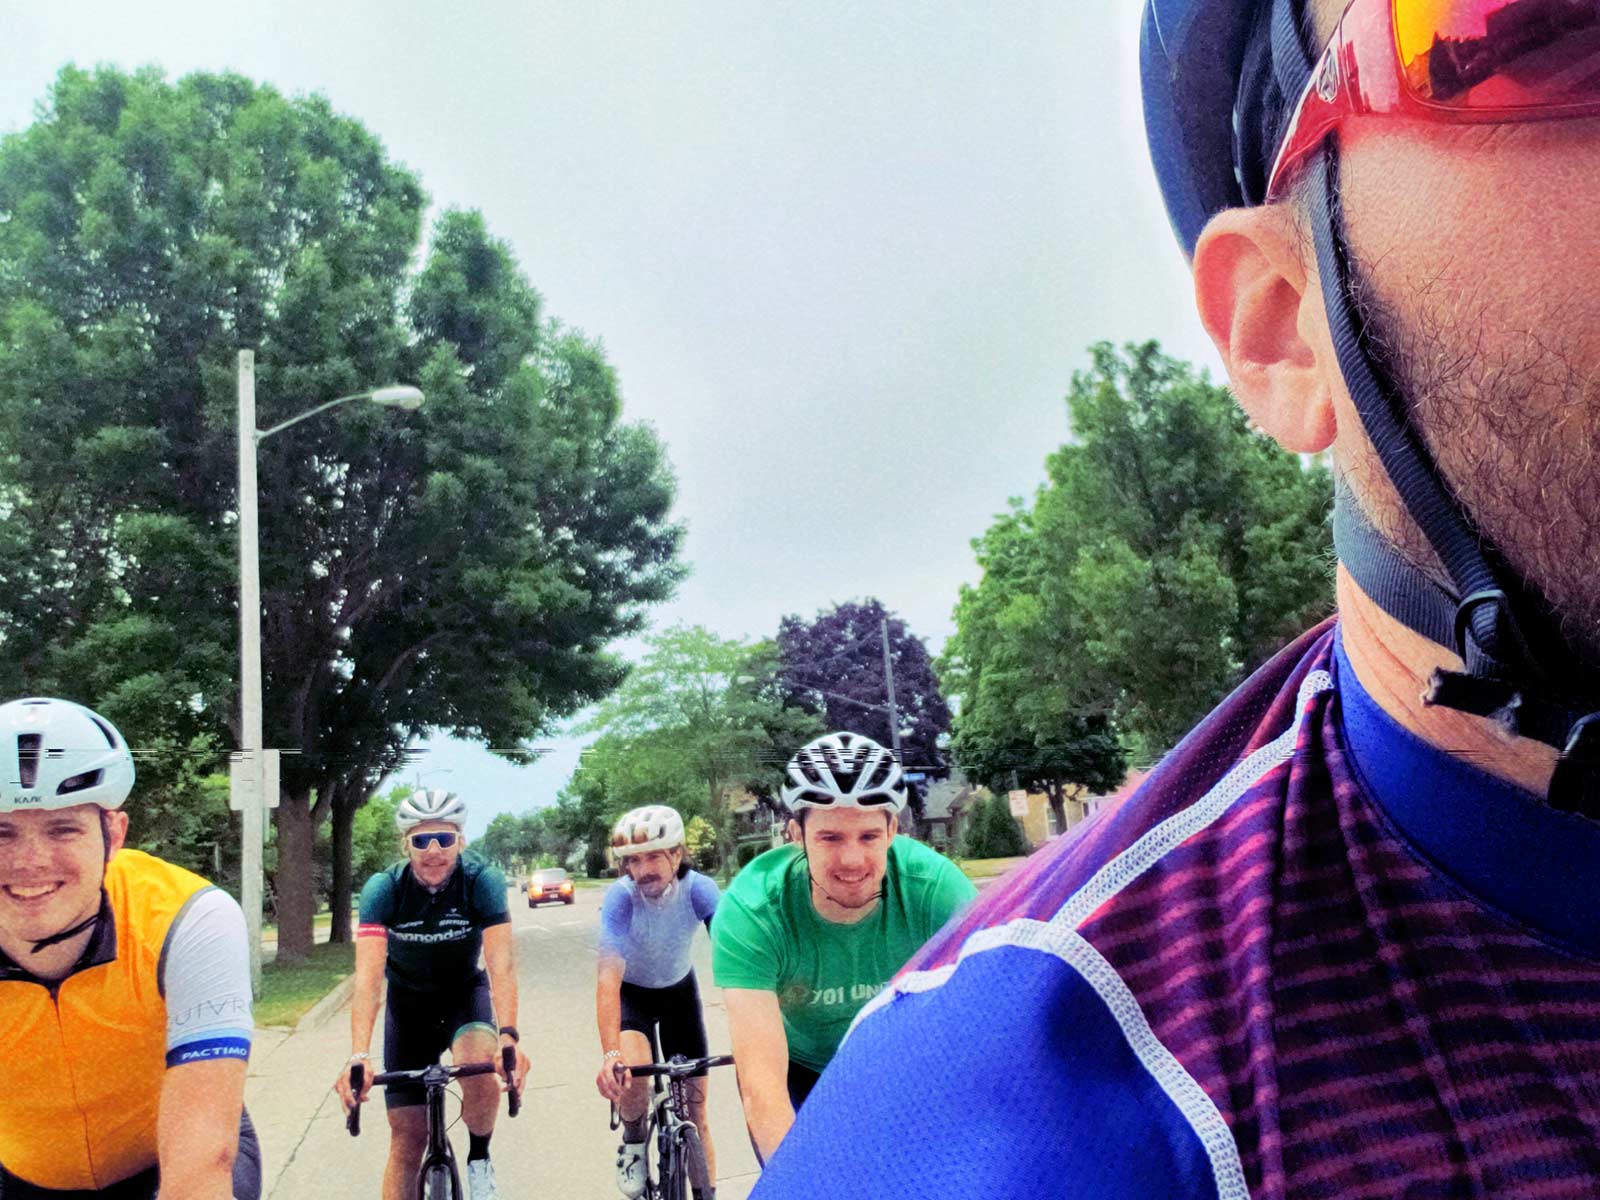 Five guys on a bike ride.